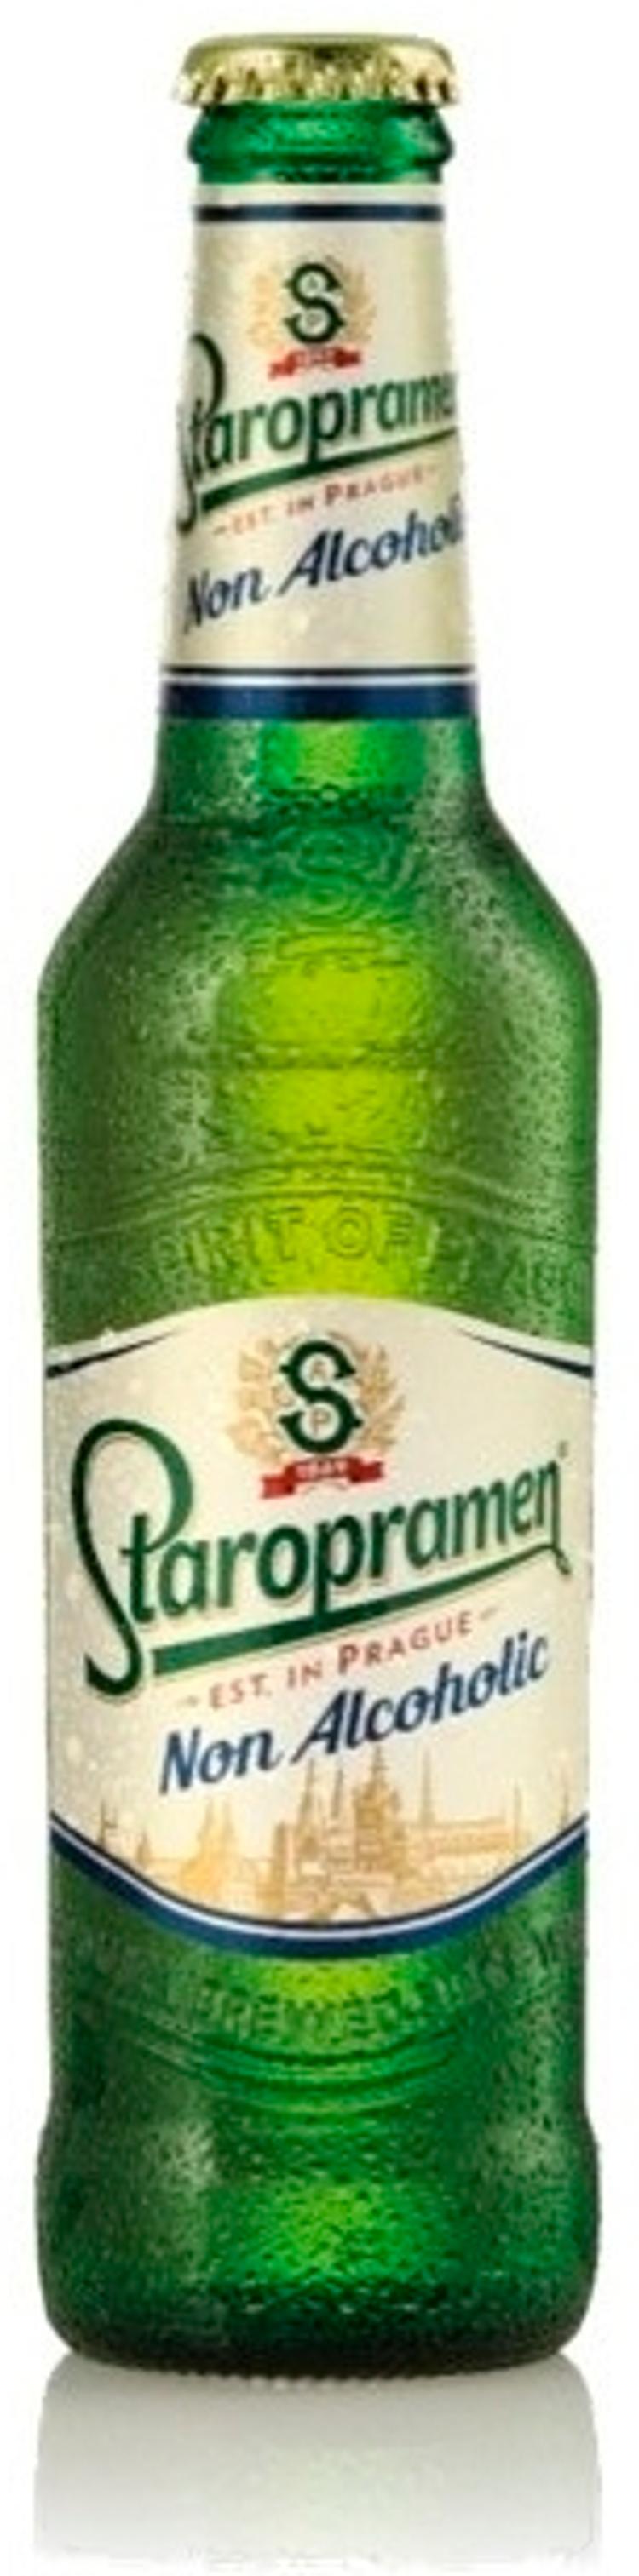 Staropramen alkoholiton olut pullo 0,33 L